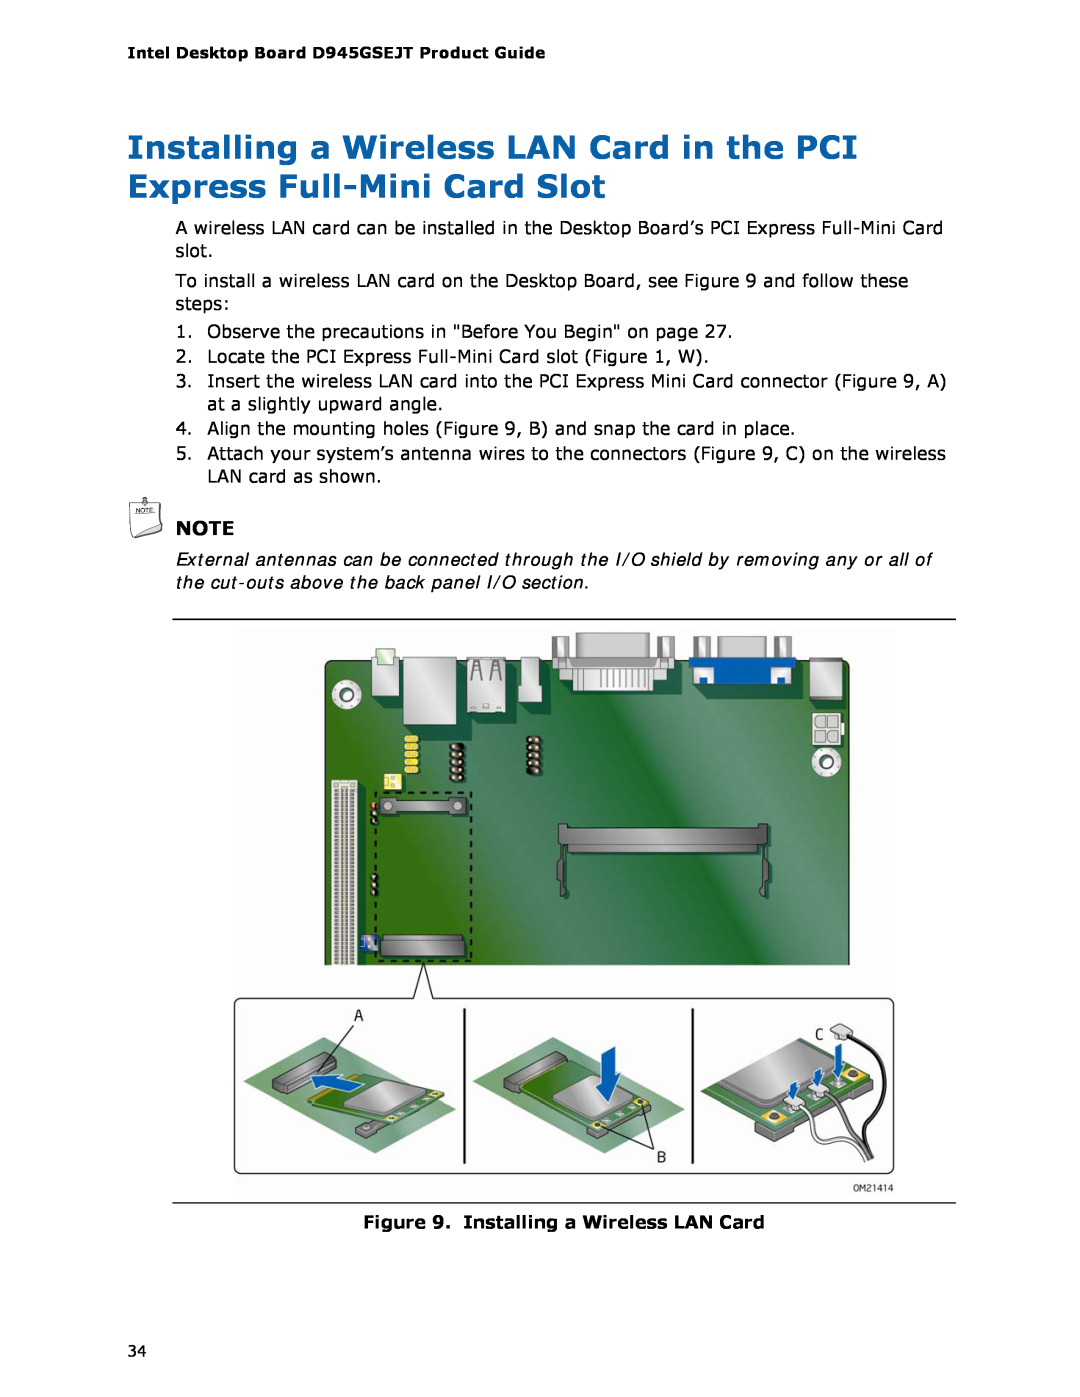 Intel D945GSEJT manual Installing a Wireless LAN Card 